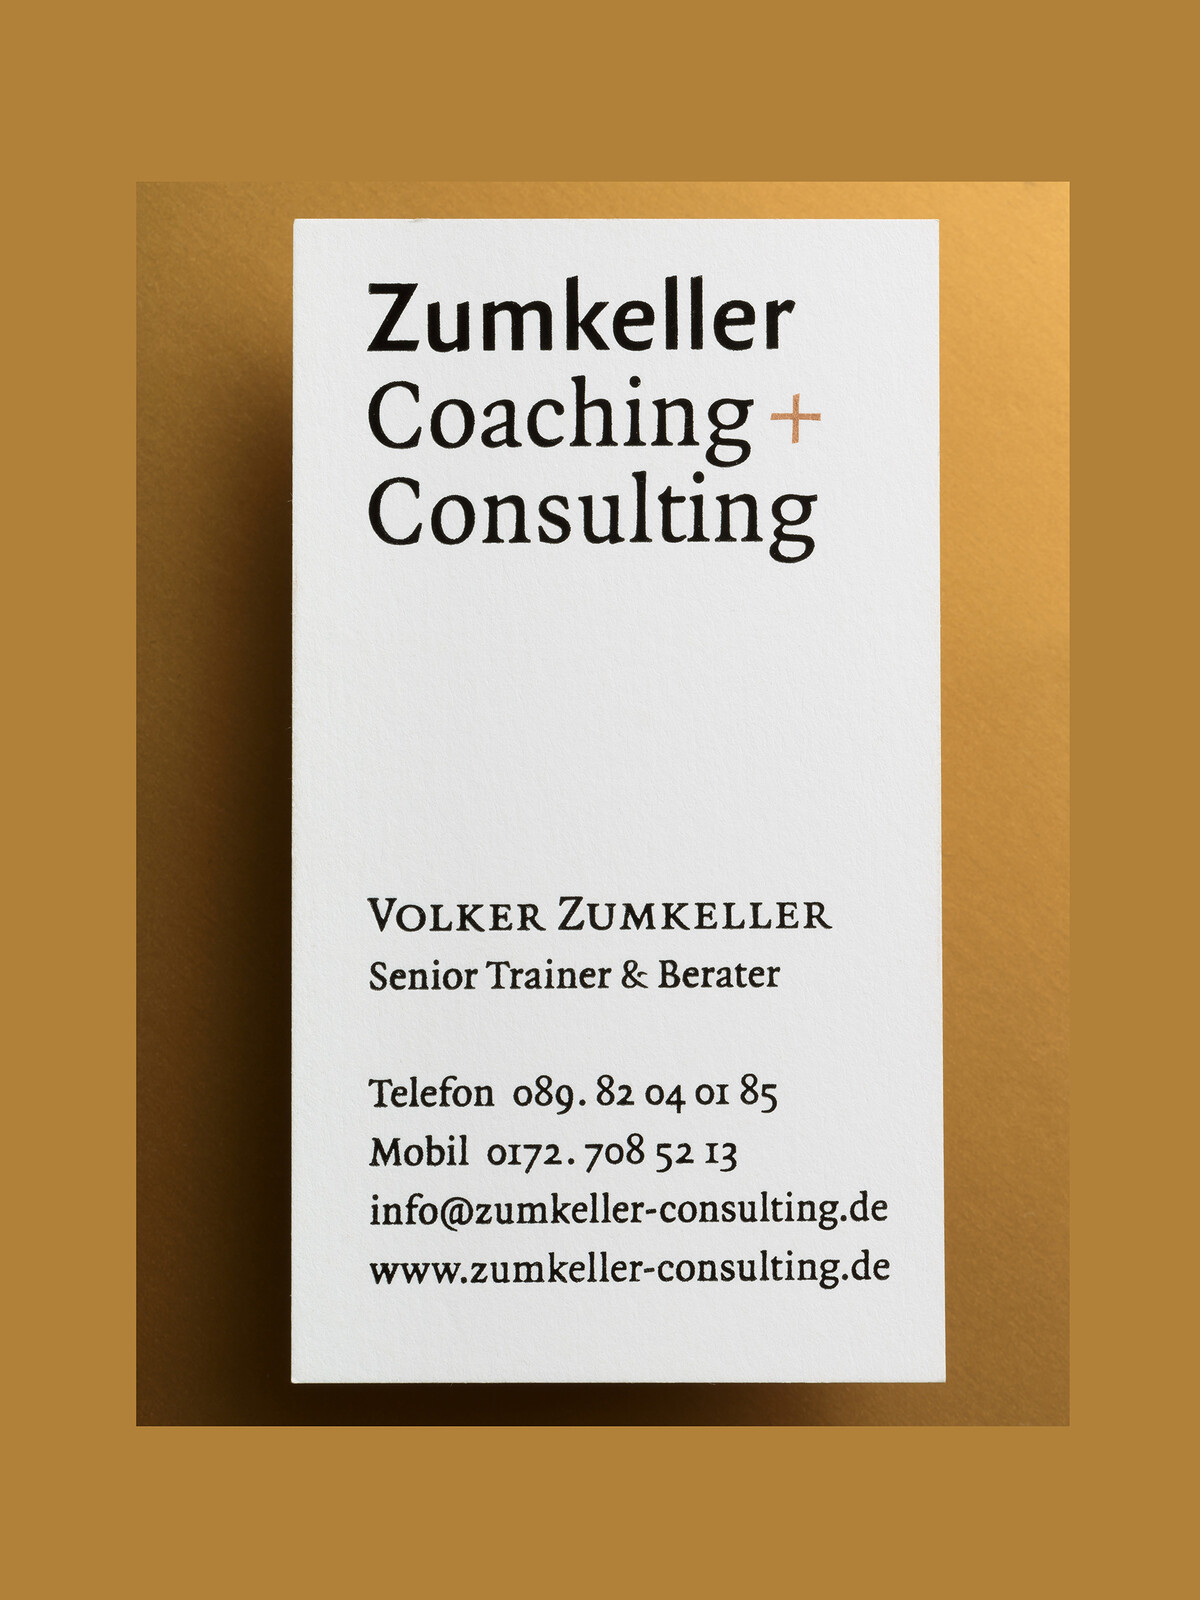 Zumkeller Consulting